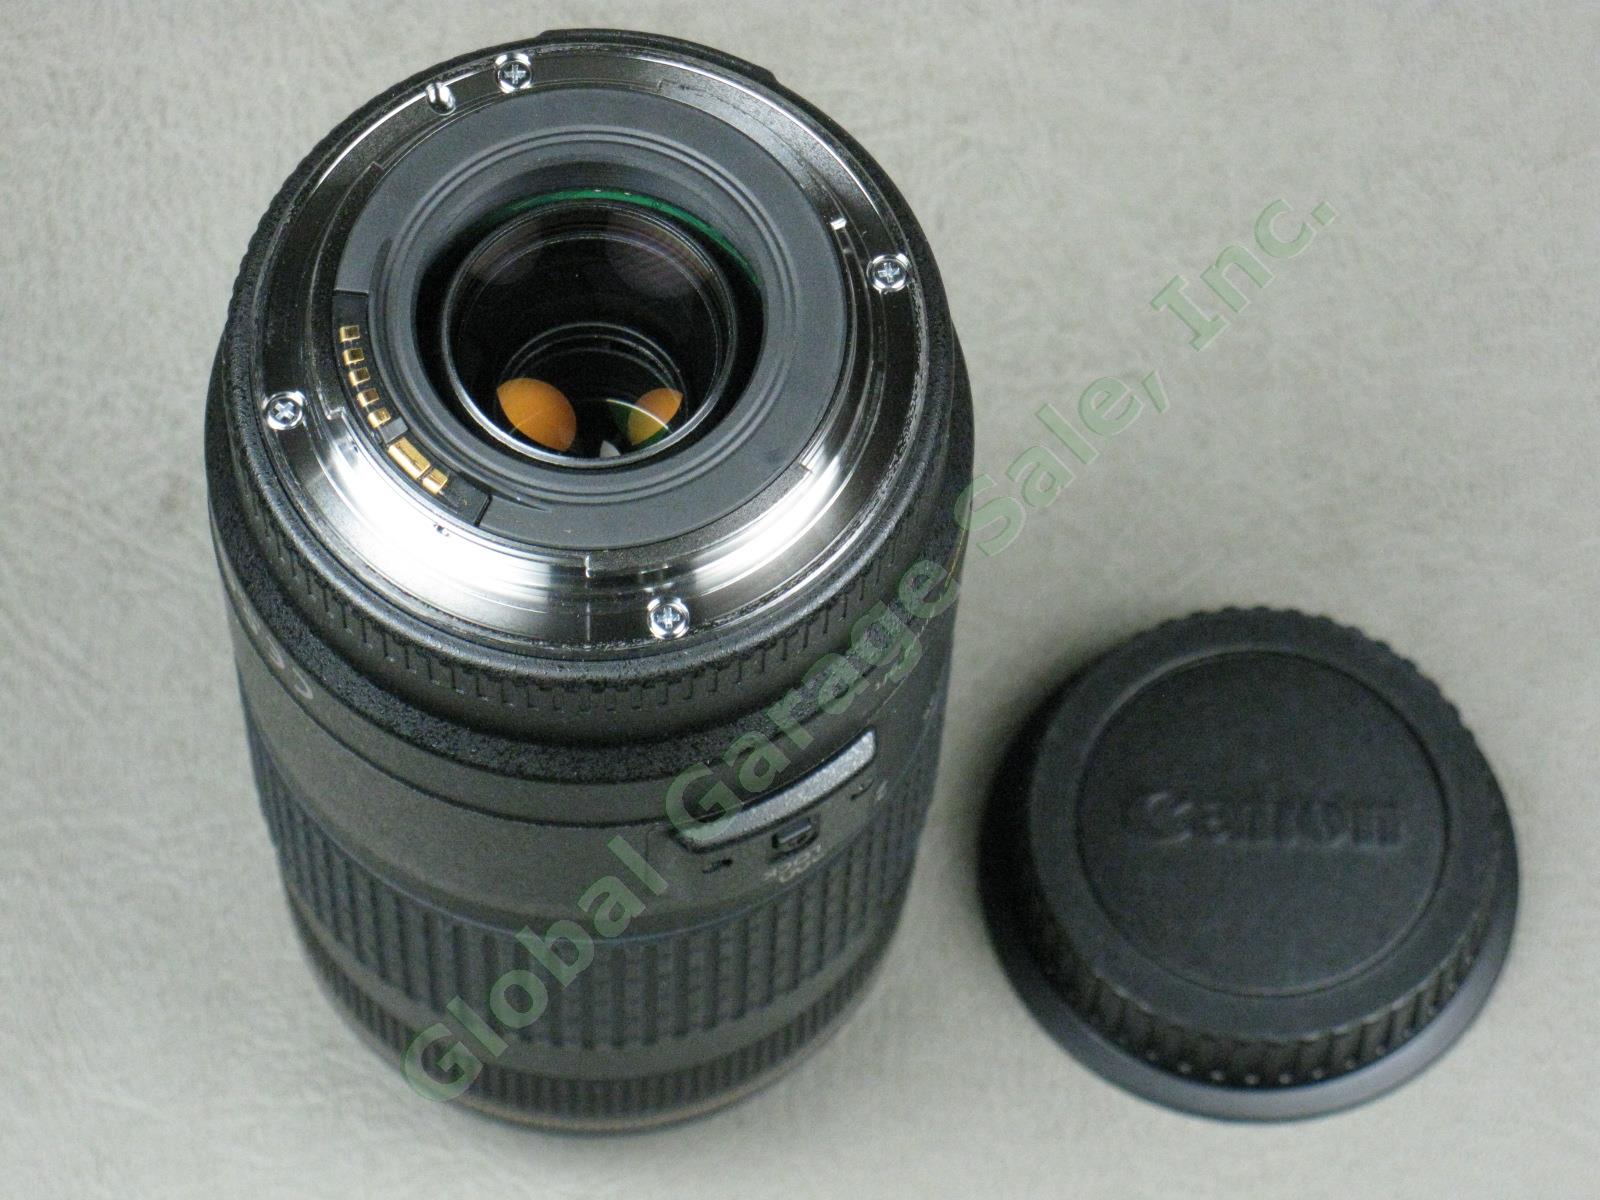 MINT! Canon Ultrasonic 70-300mm Image Stabilizer AF MF Macro Zoom Lens 1:4-5.6 4